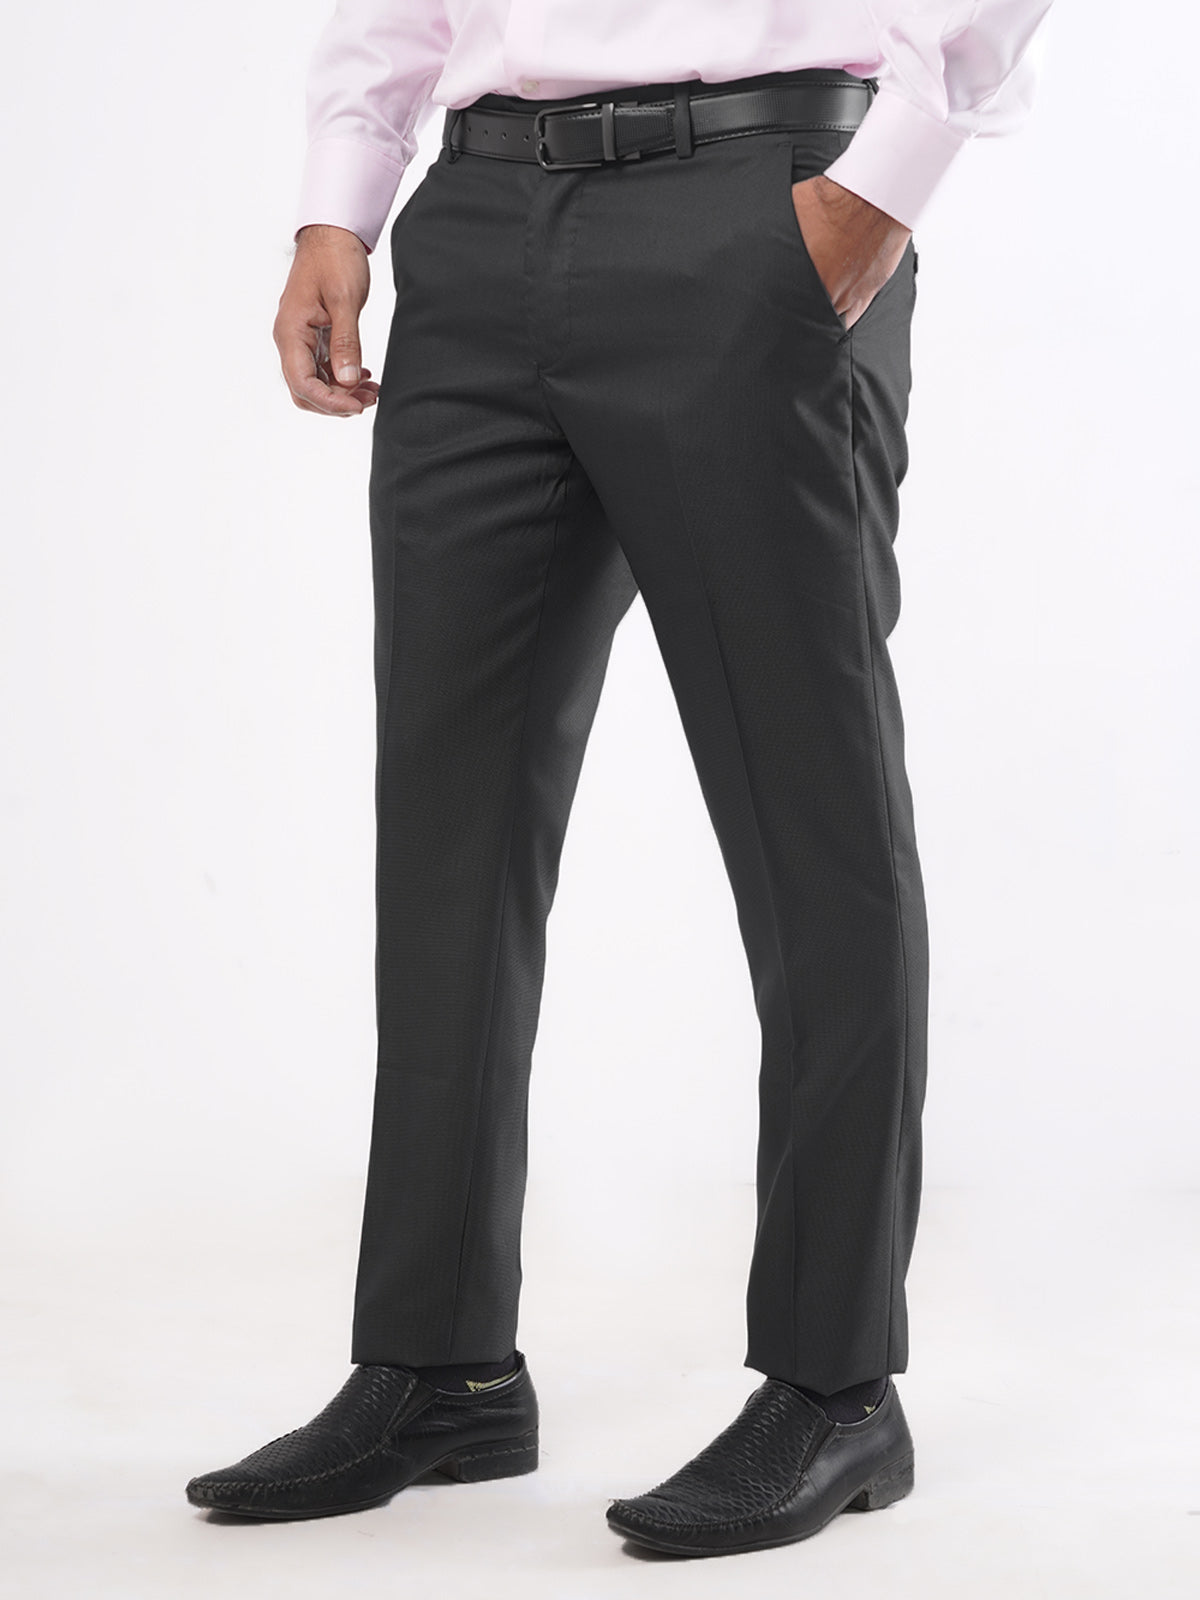 Black Plain Executive Formal Dress Trouser (FDT-135)